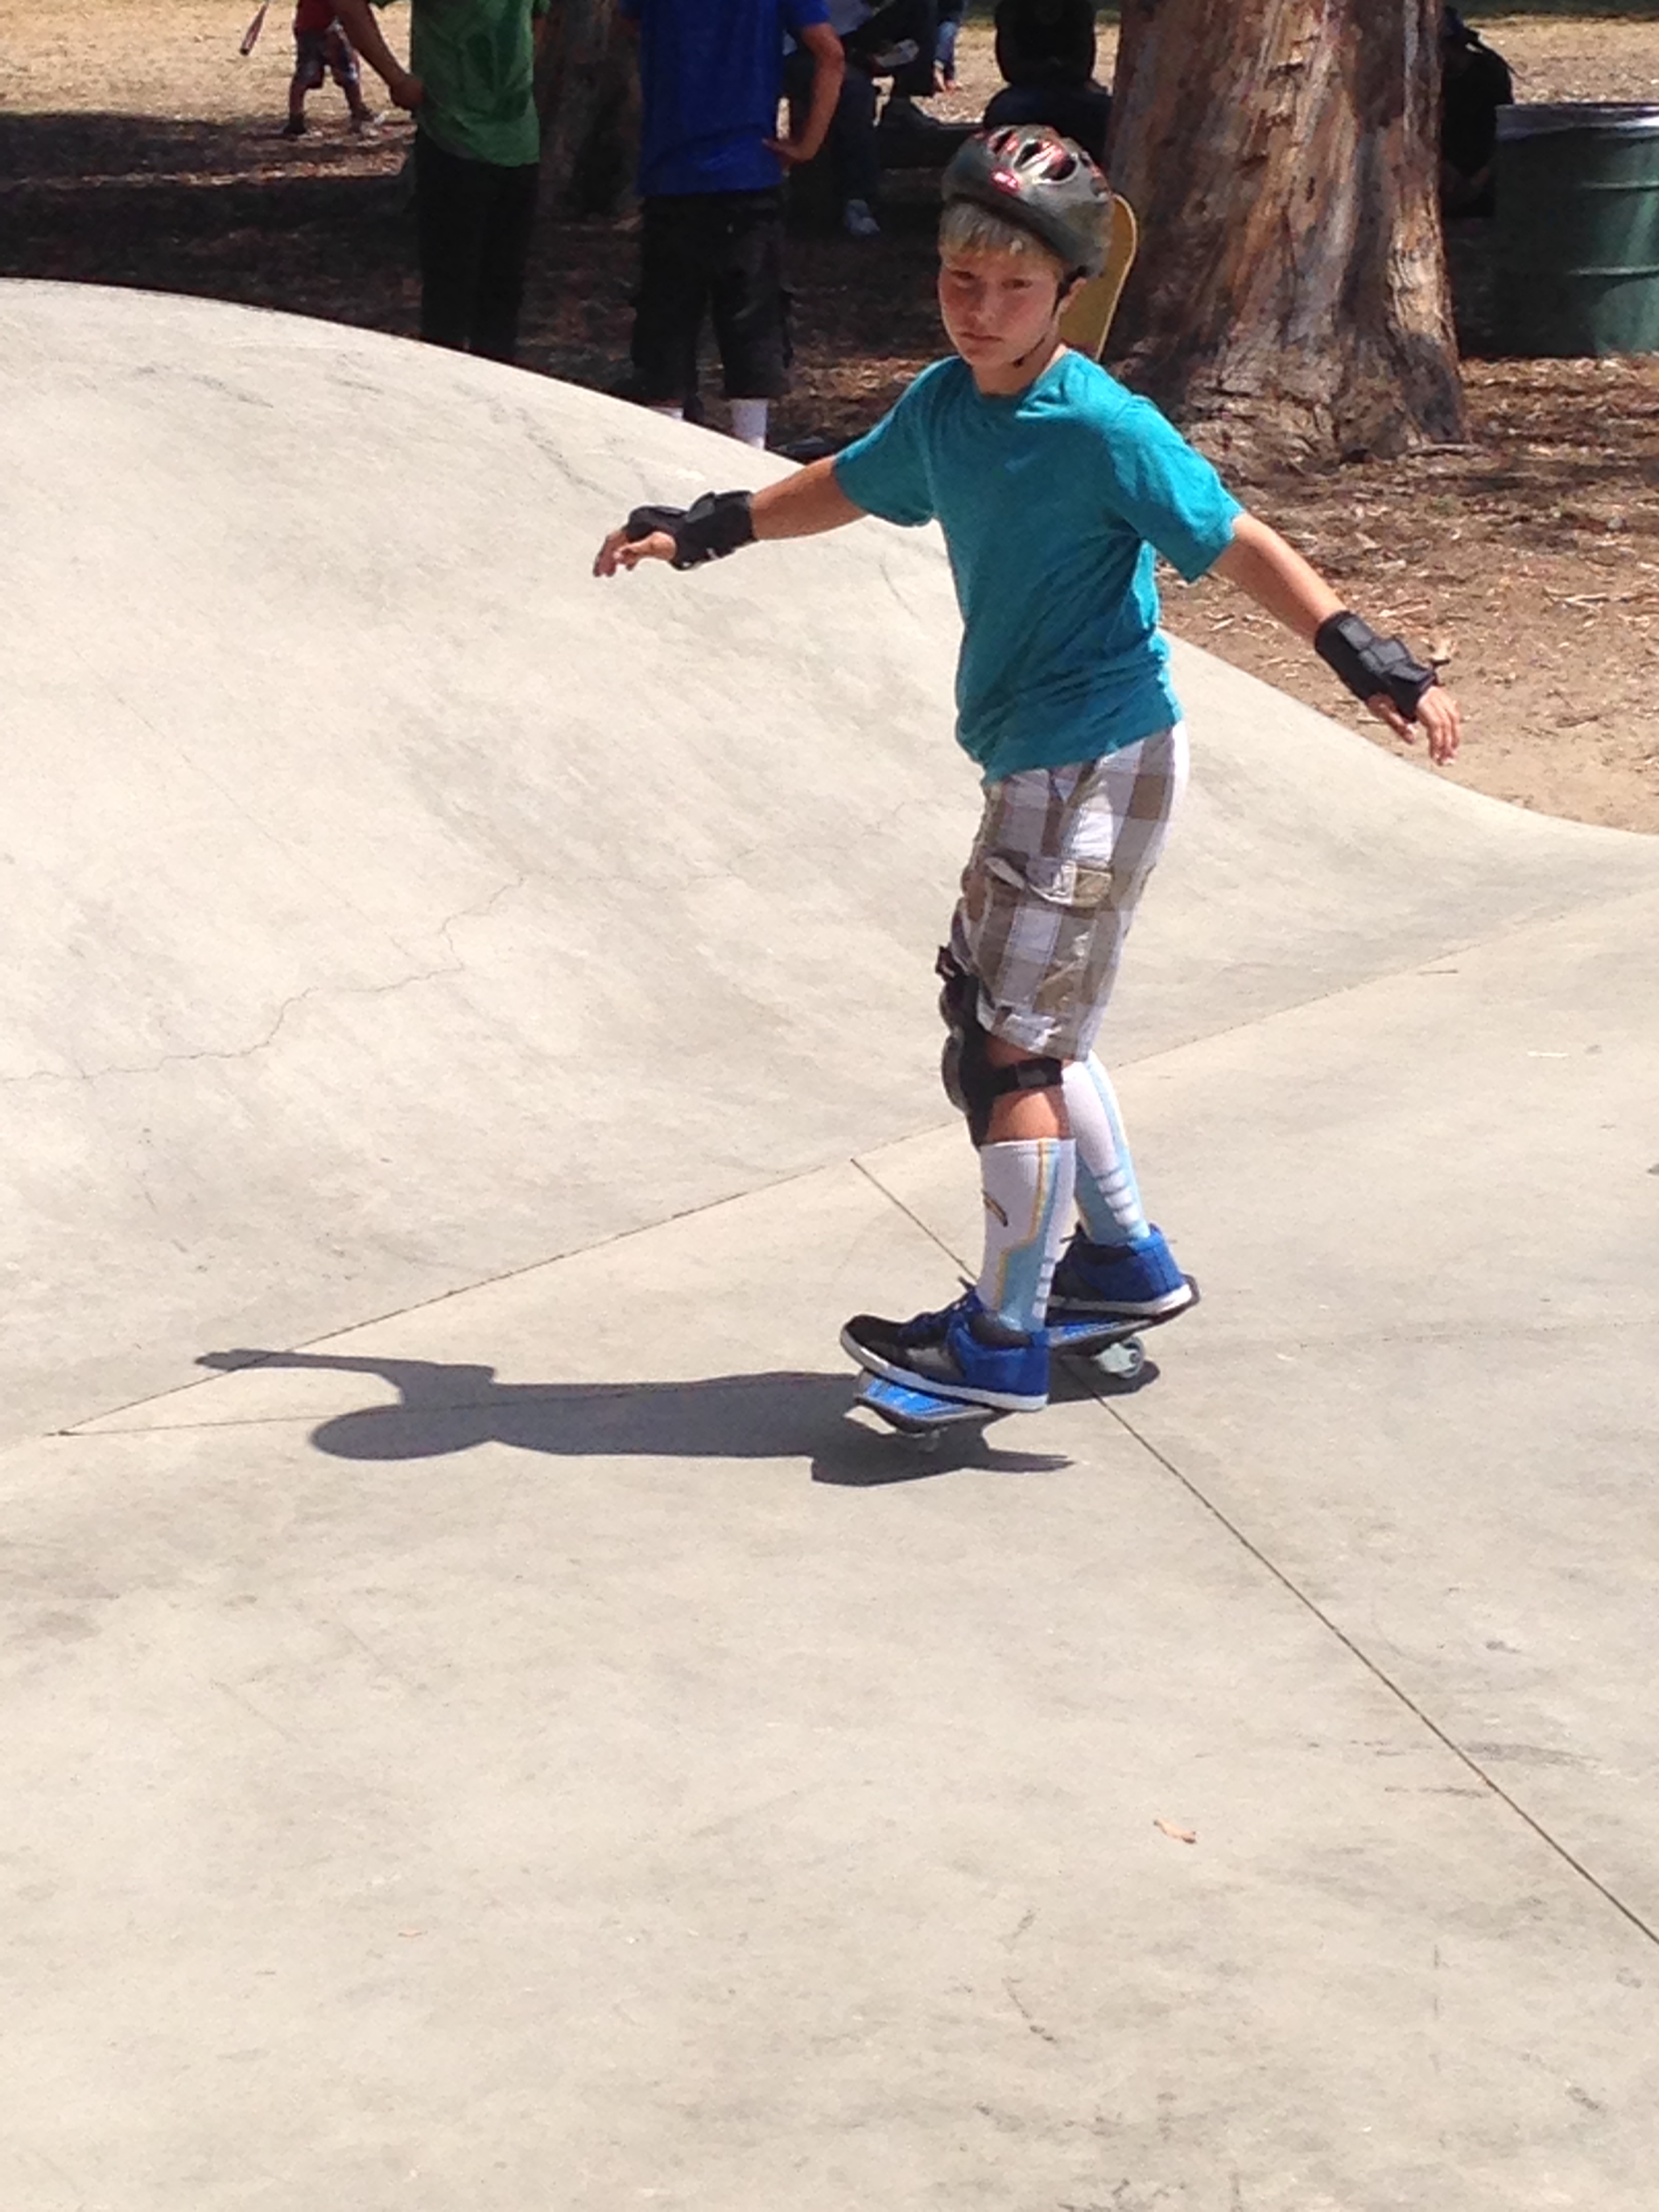 Riding a Ripstik at the Skate Park.